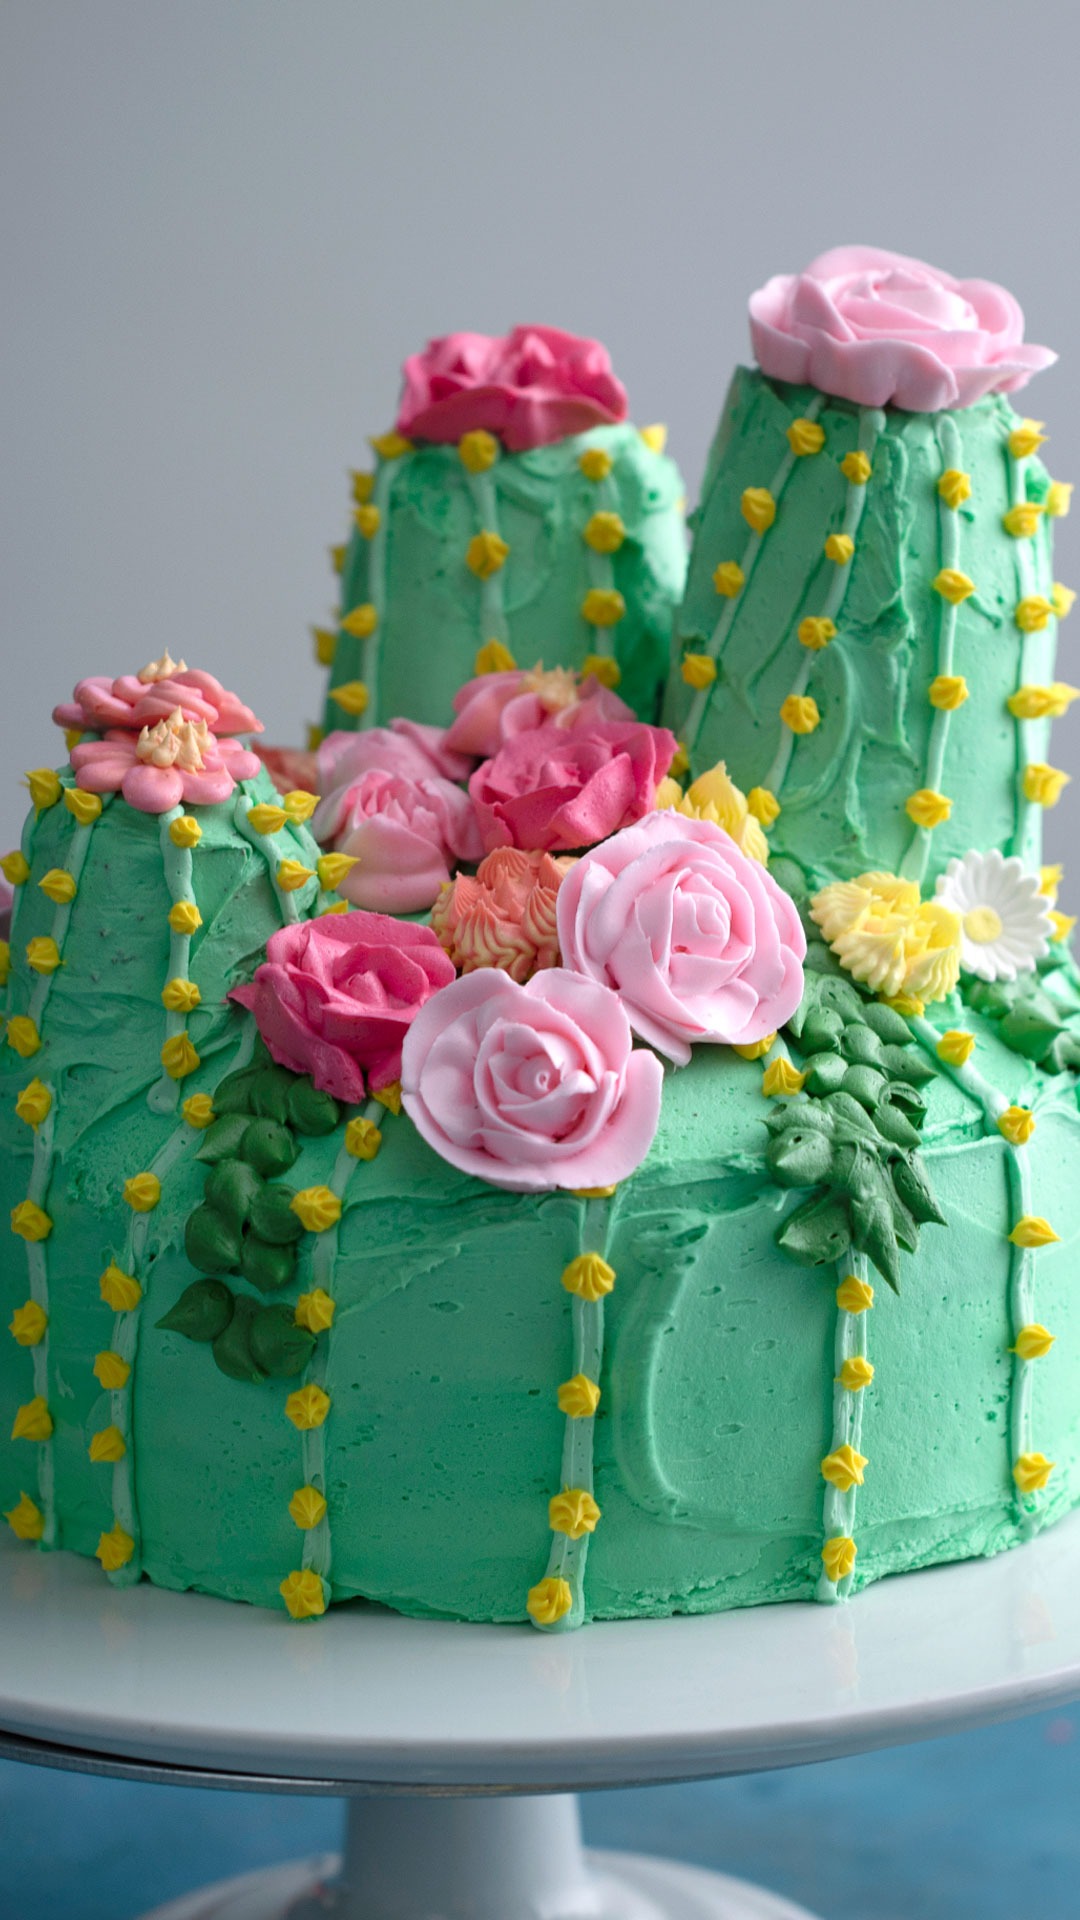 A Cactus Cake With Major Desert Vibes - Sugar & Sparrow